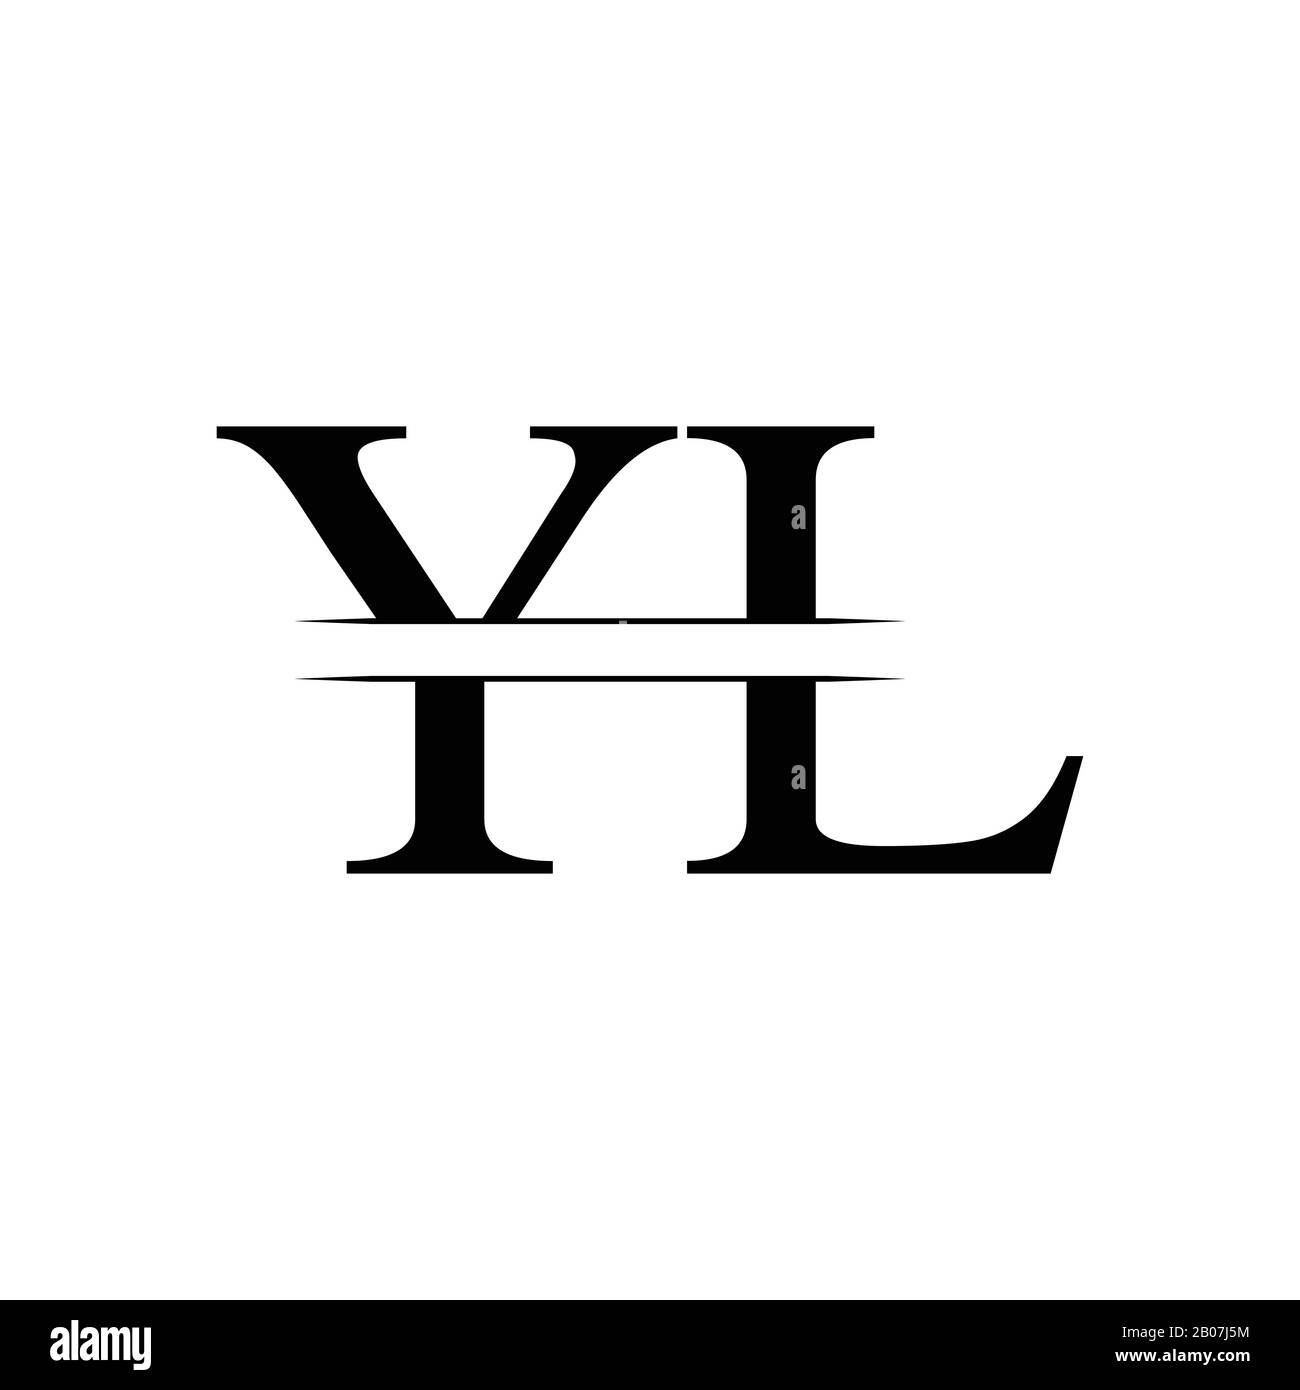 Yl logo Black and White Stock Photos & Images - Alamy